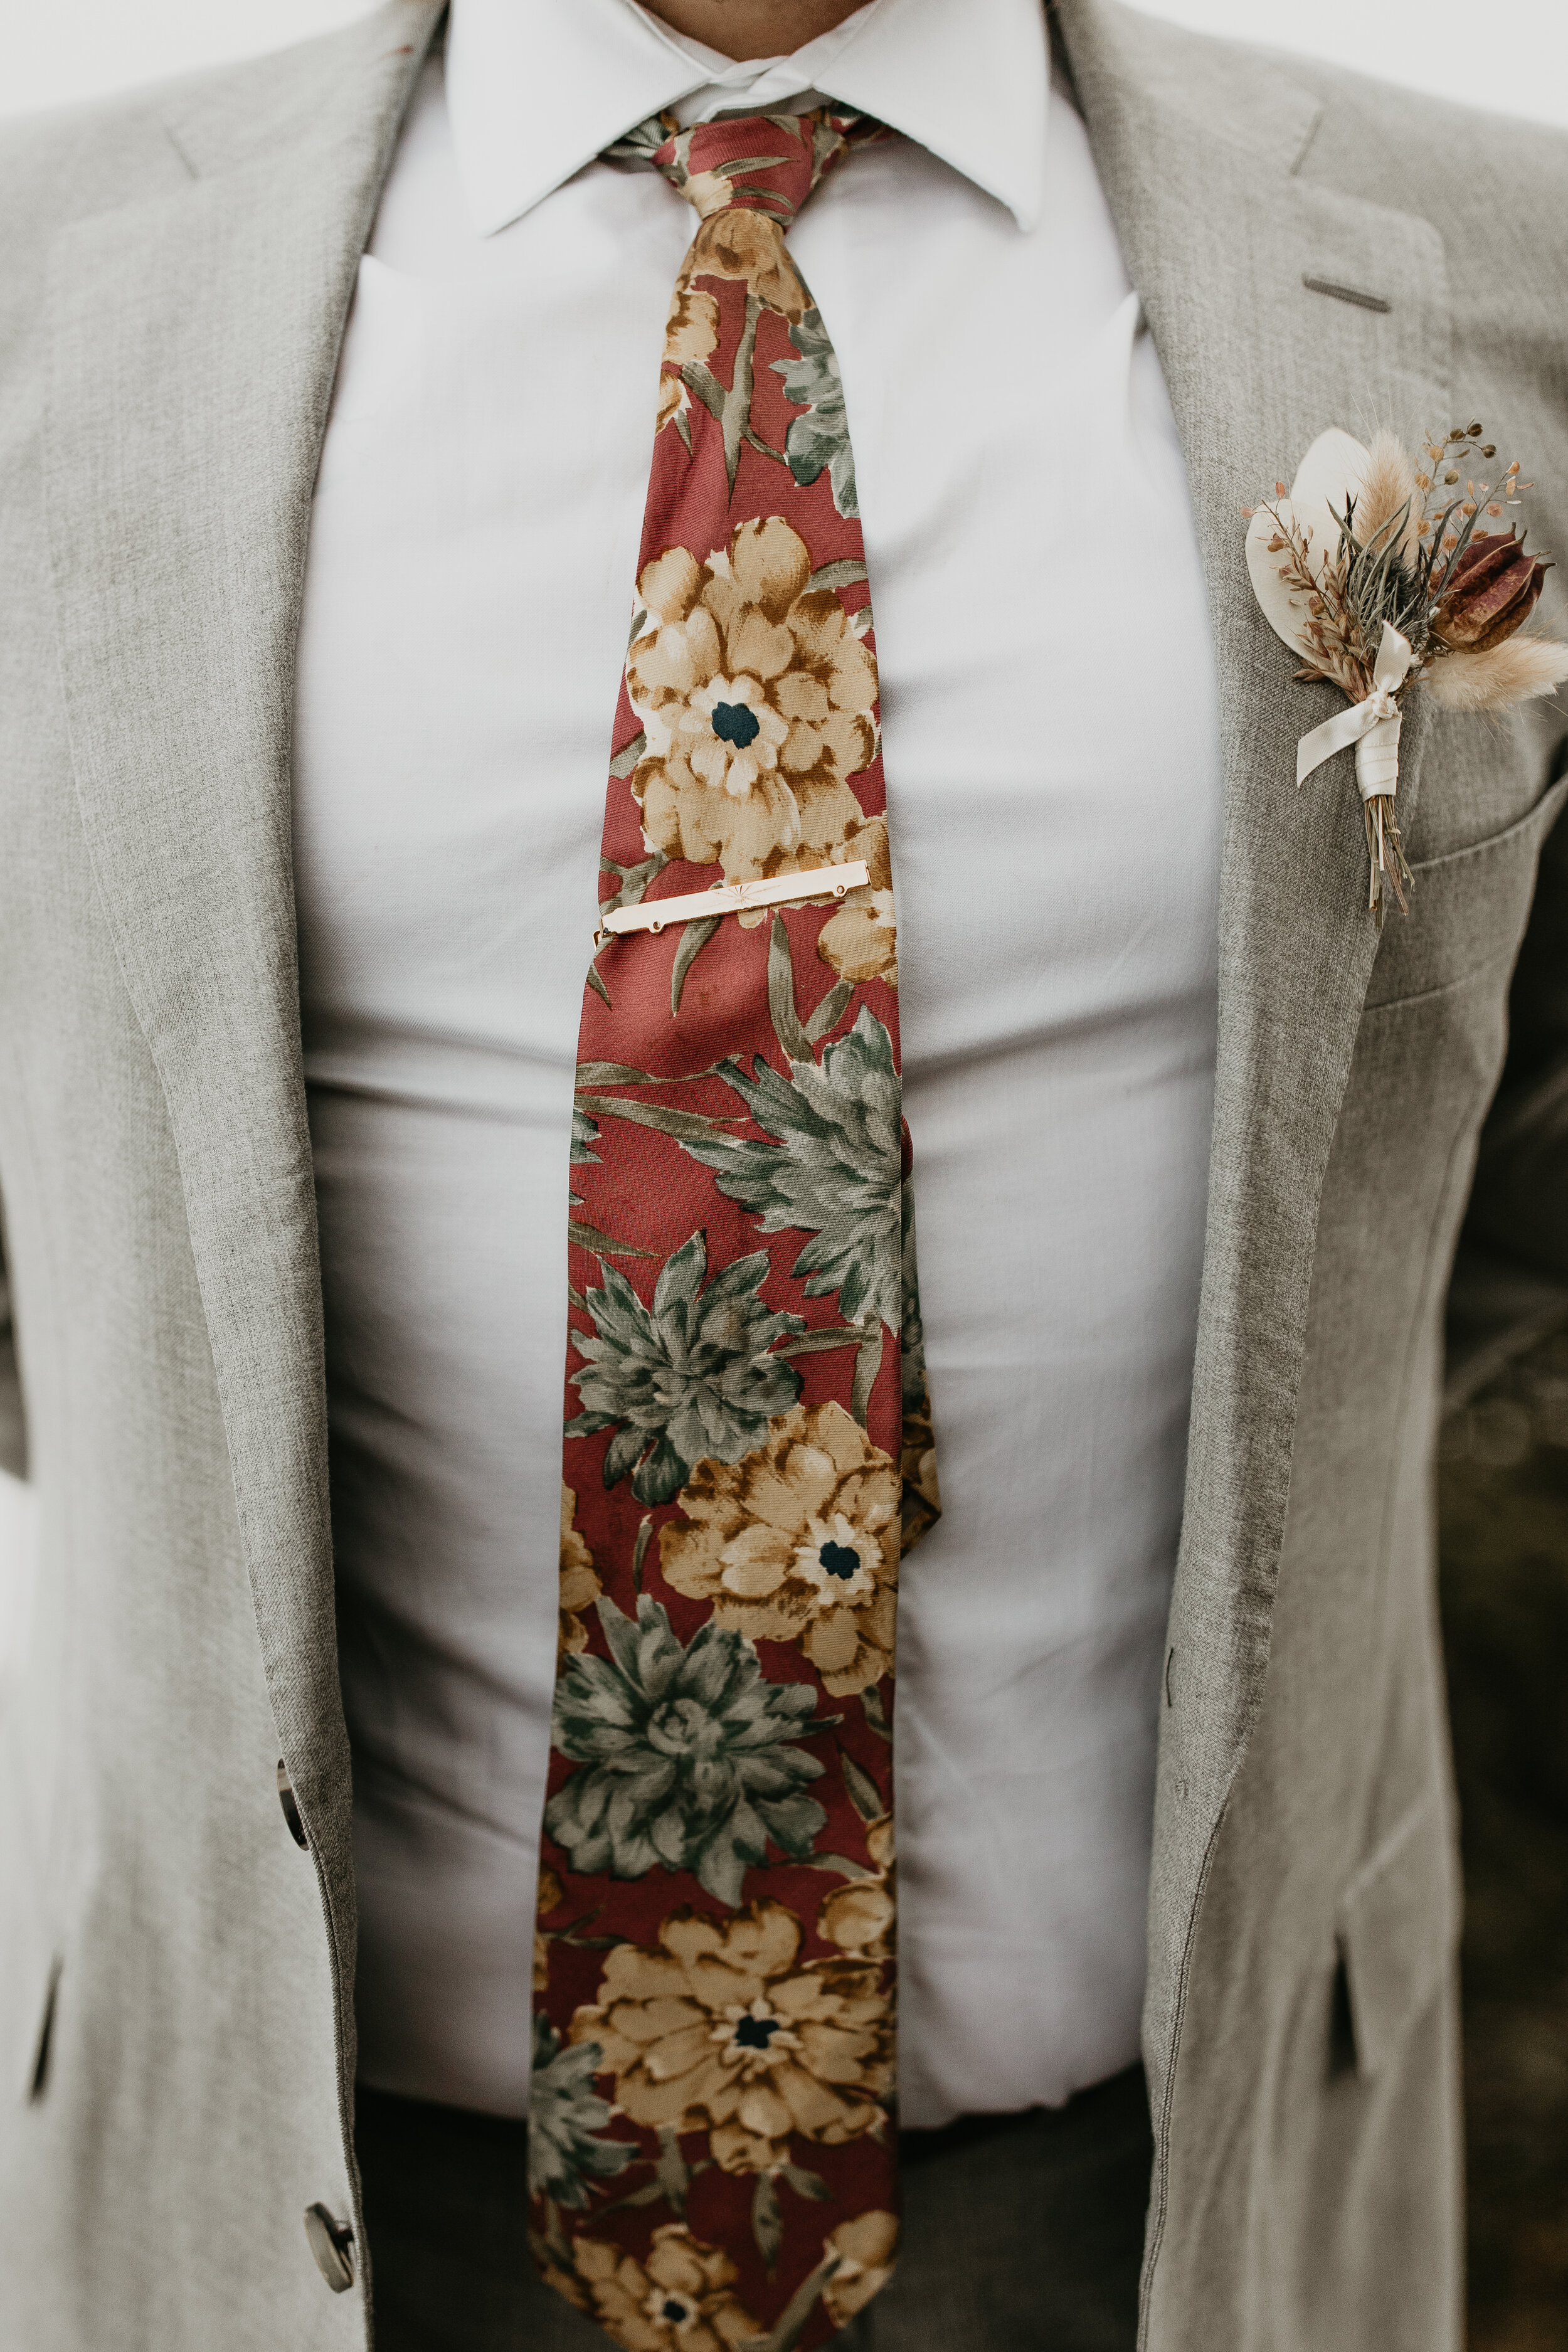 Nicole-Daacke-Photography-closeup-mens-suit-and-tie.jpg